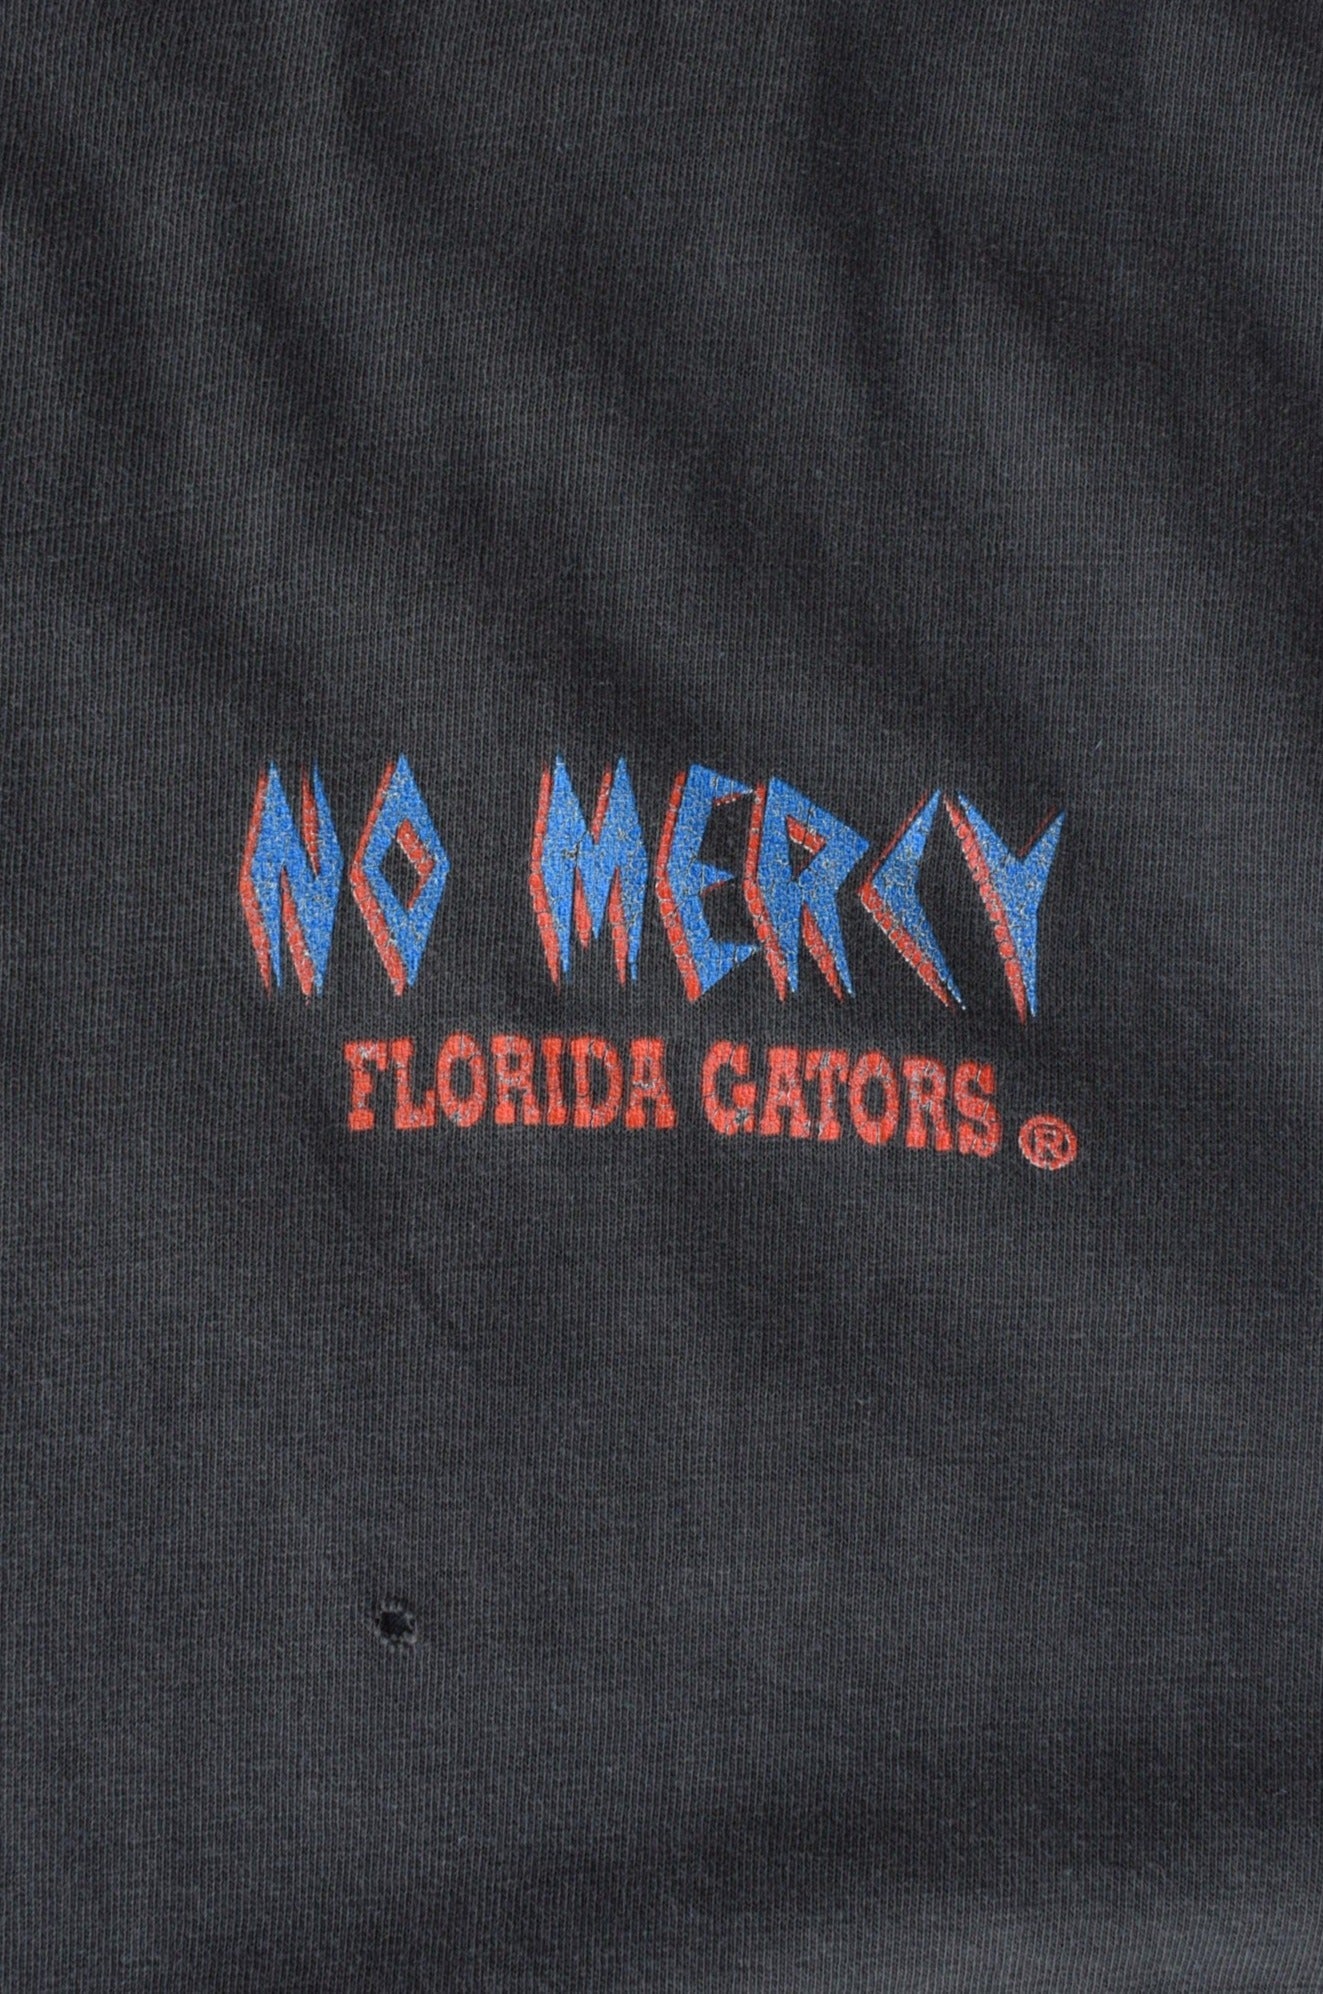 Vintage 90s University of Florida Gators 'No Mercy' Tee (XL/XXL) - Retrospective Store